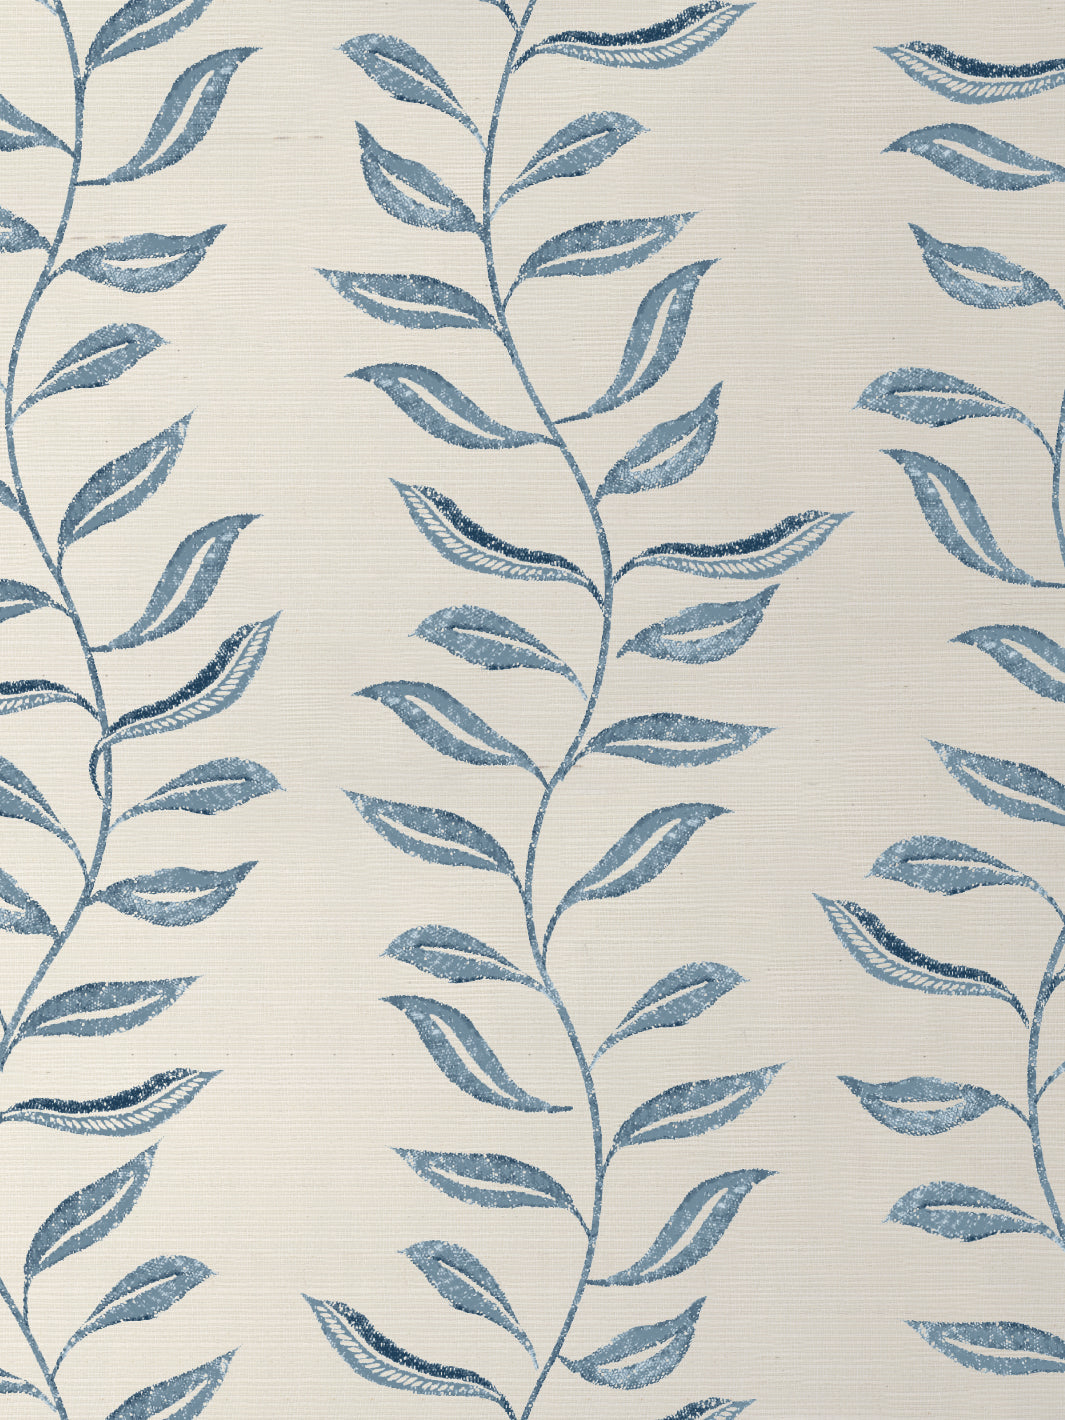 'Seneca' Grasscloth Wallpaper by Nathan Turner - Darker Blue